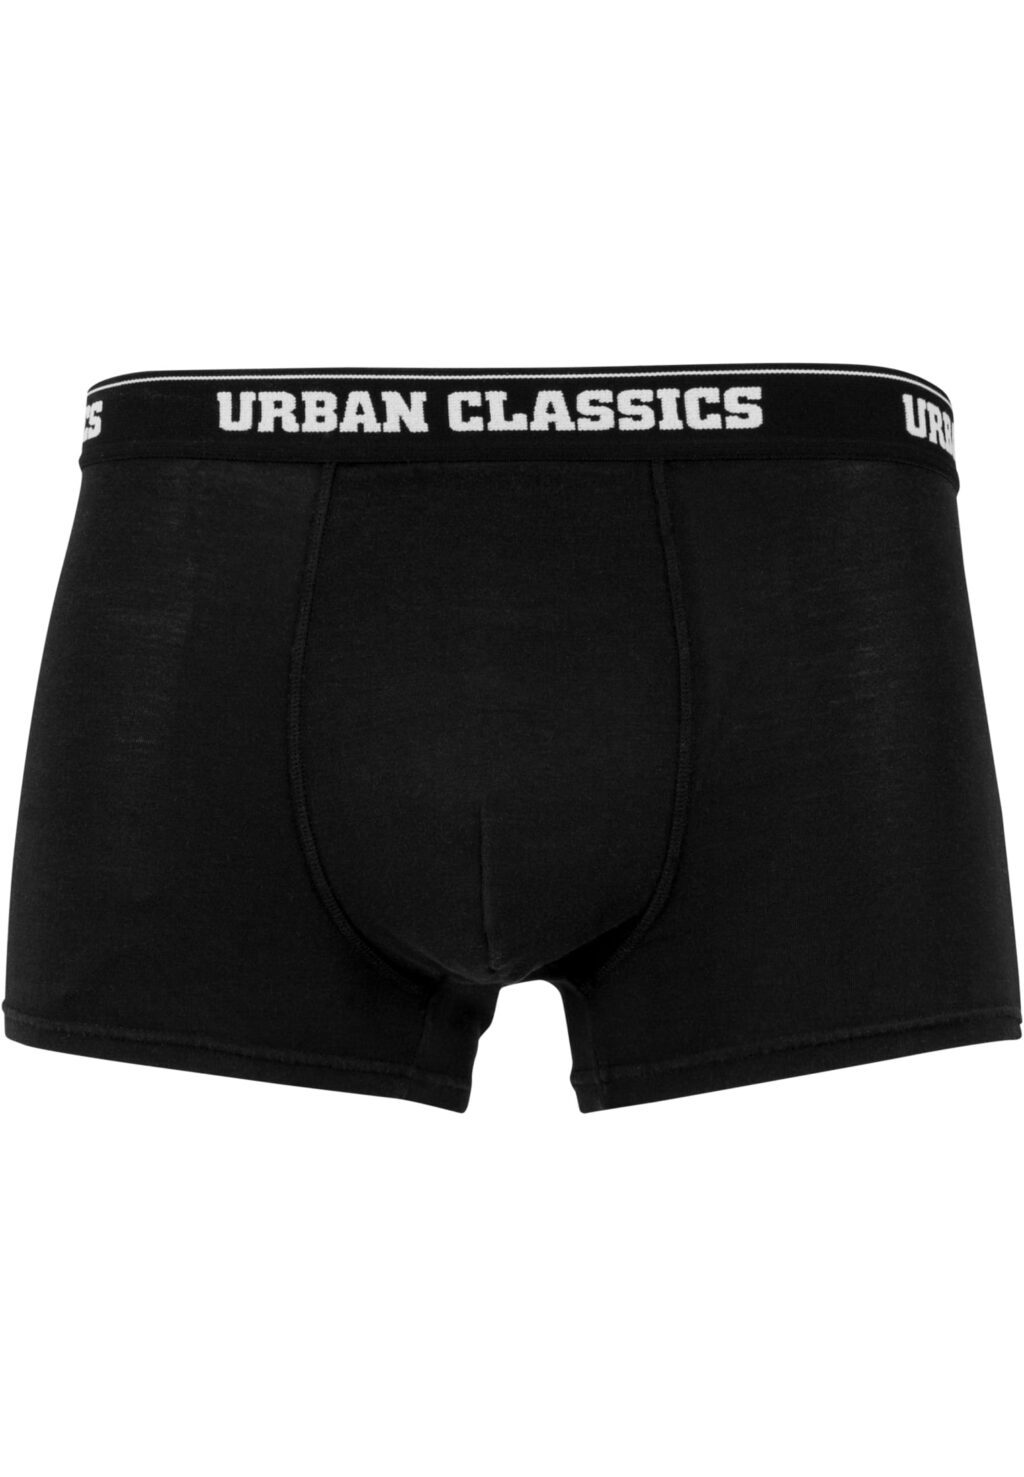 Urban Classics Organic Boxer Shorts 3-Pack white/navy/black TB3838